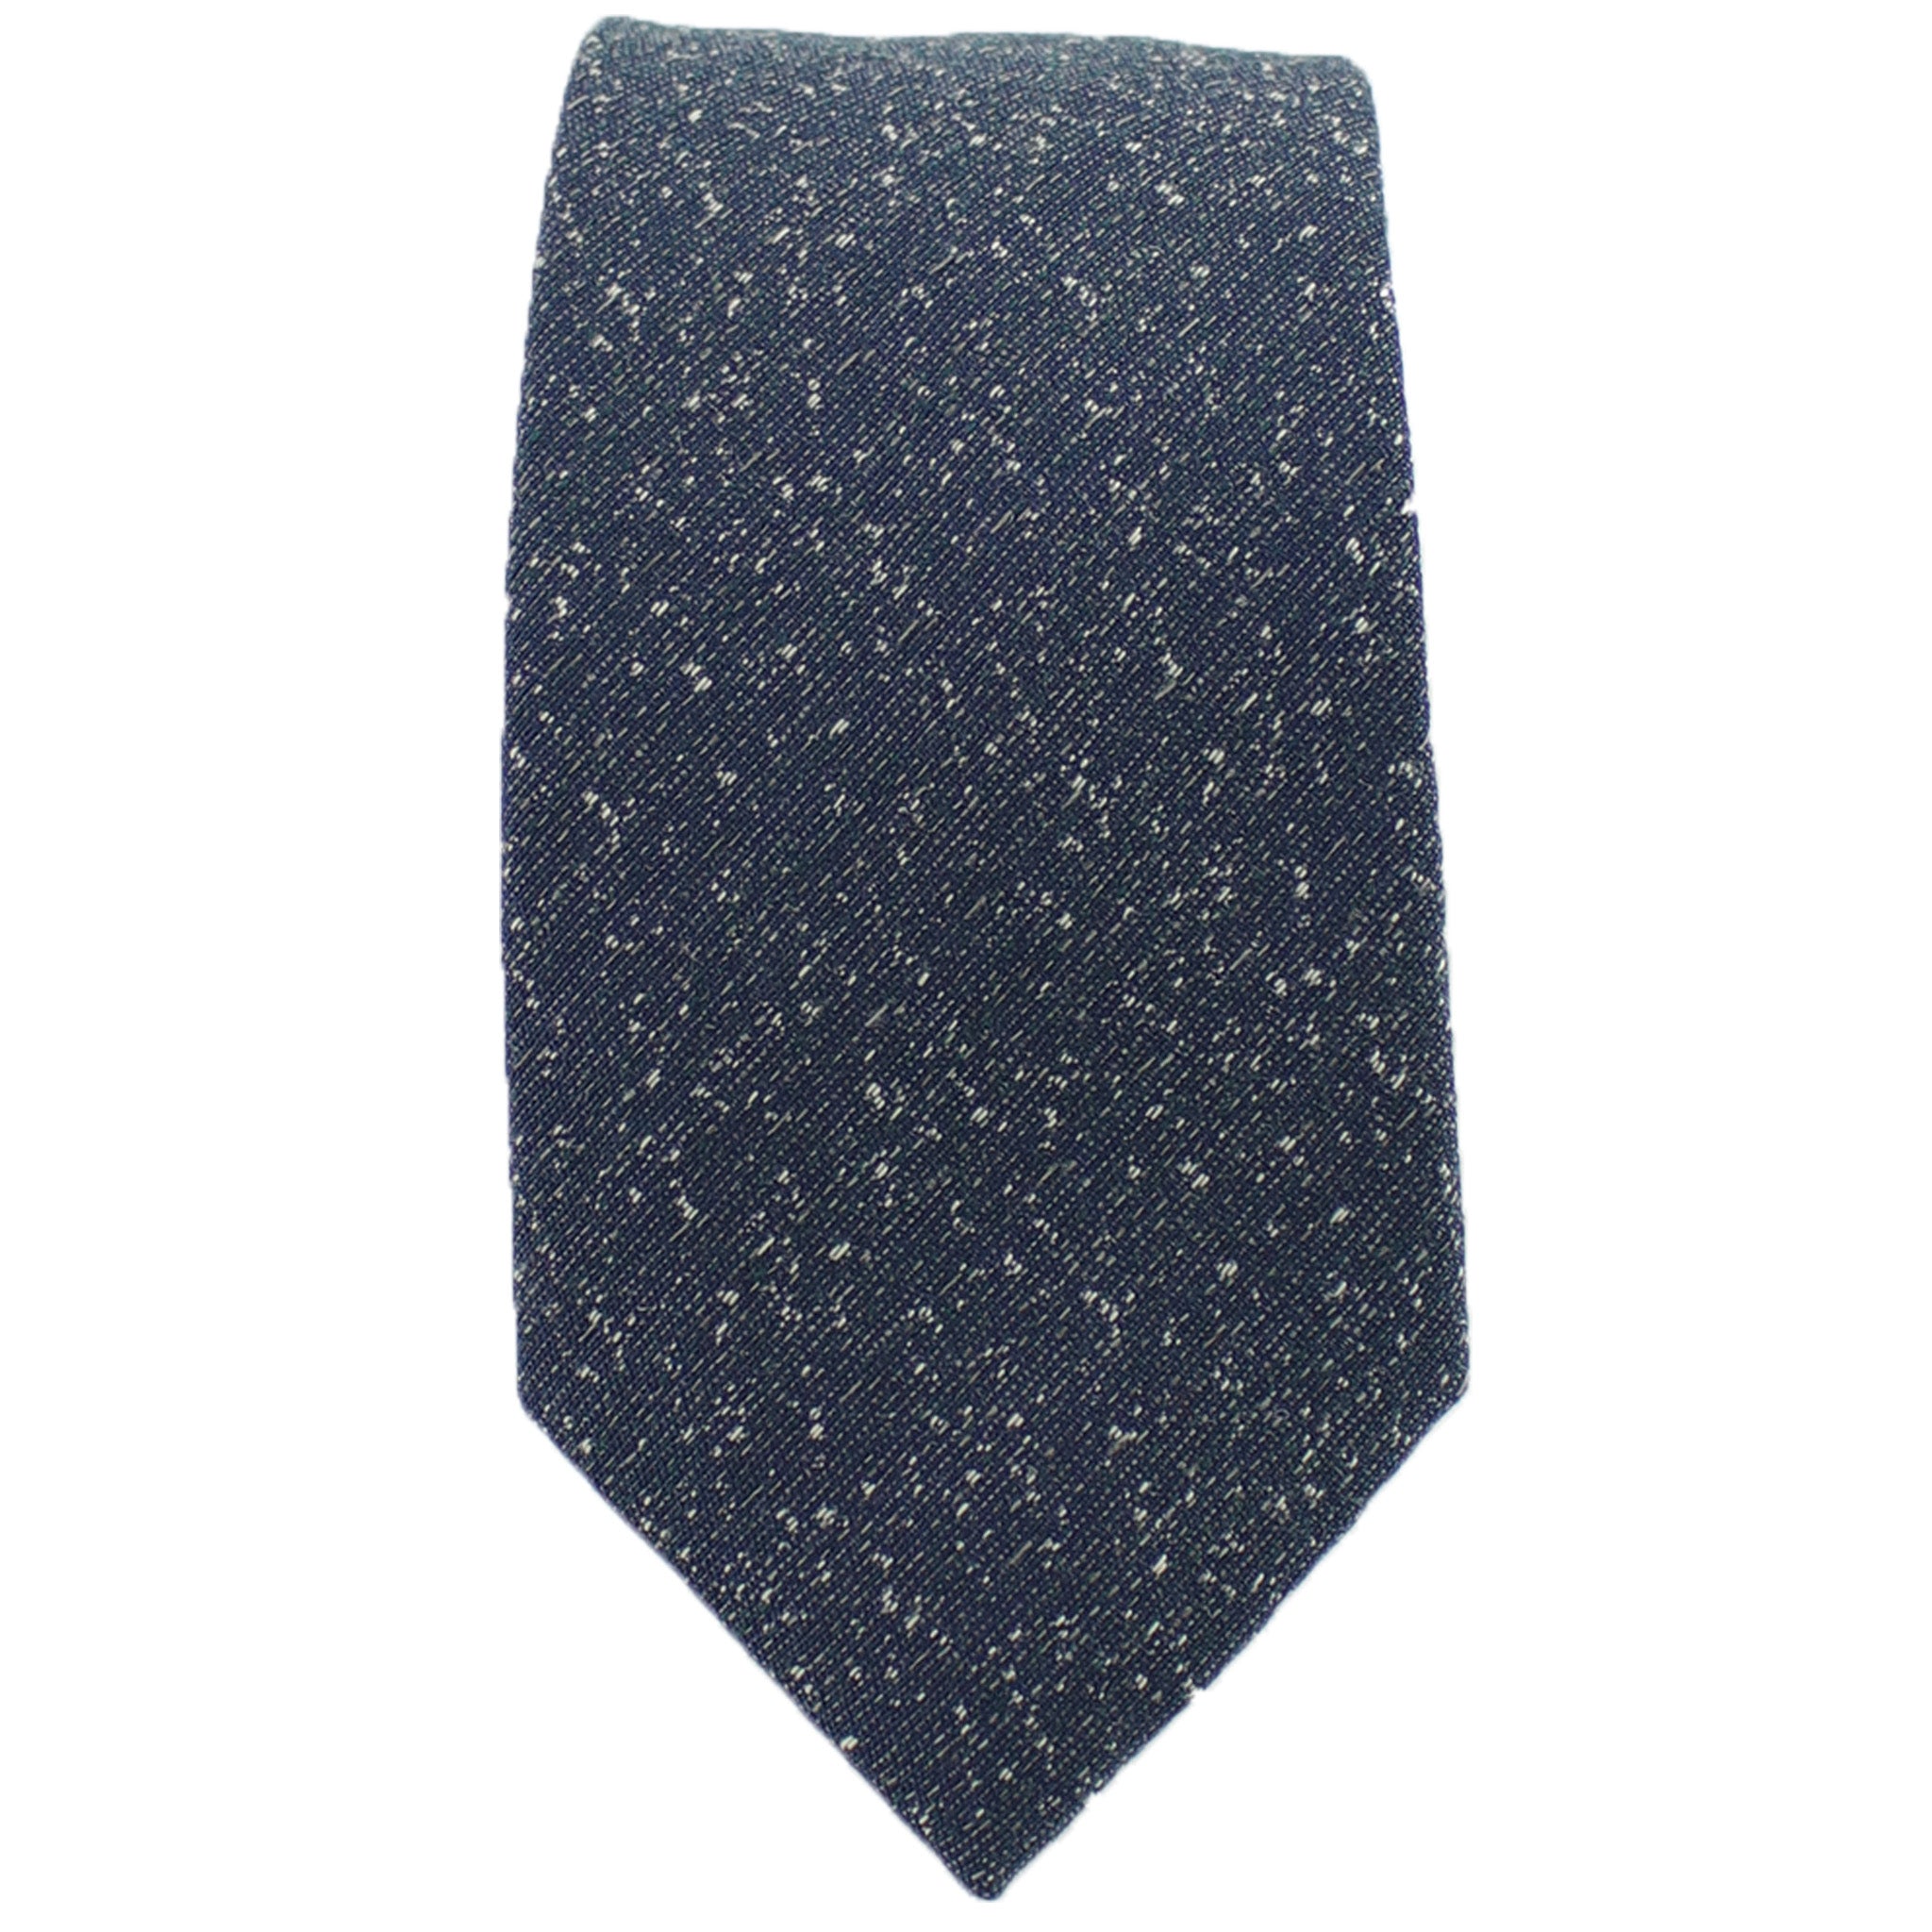 Dark Teal Speck Tie from DIBI